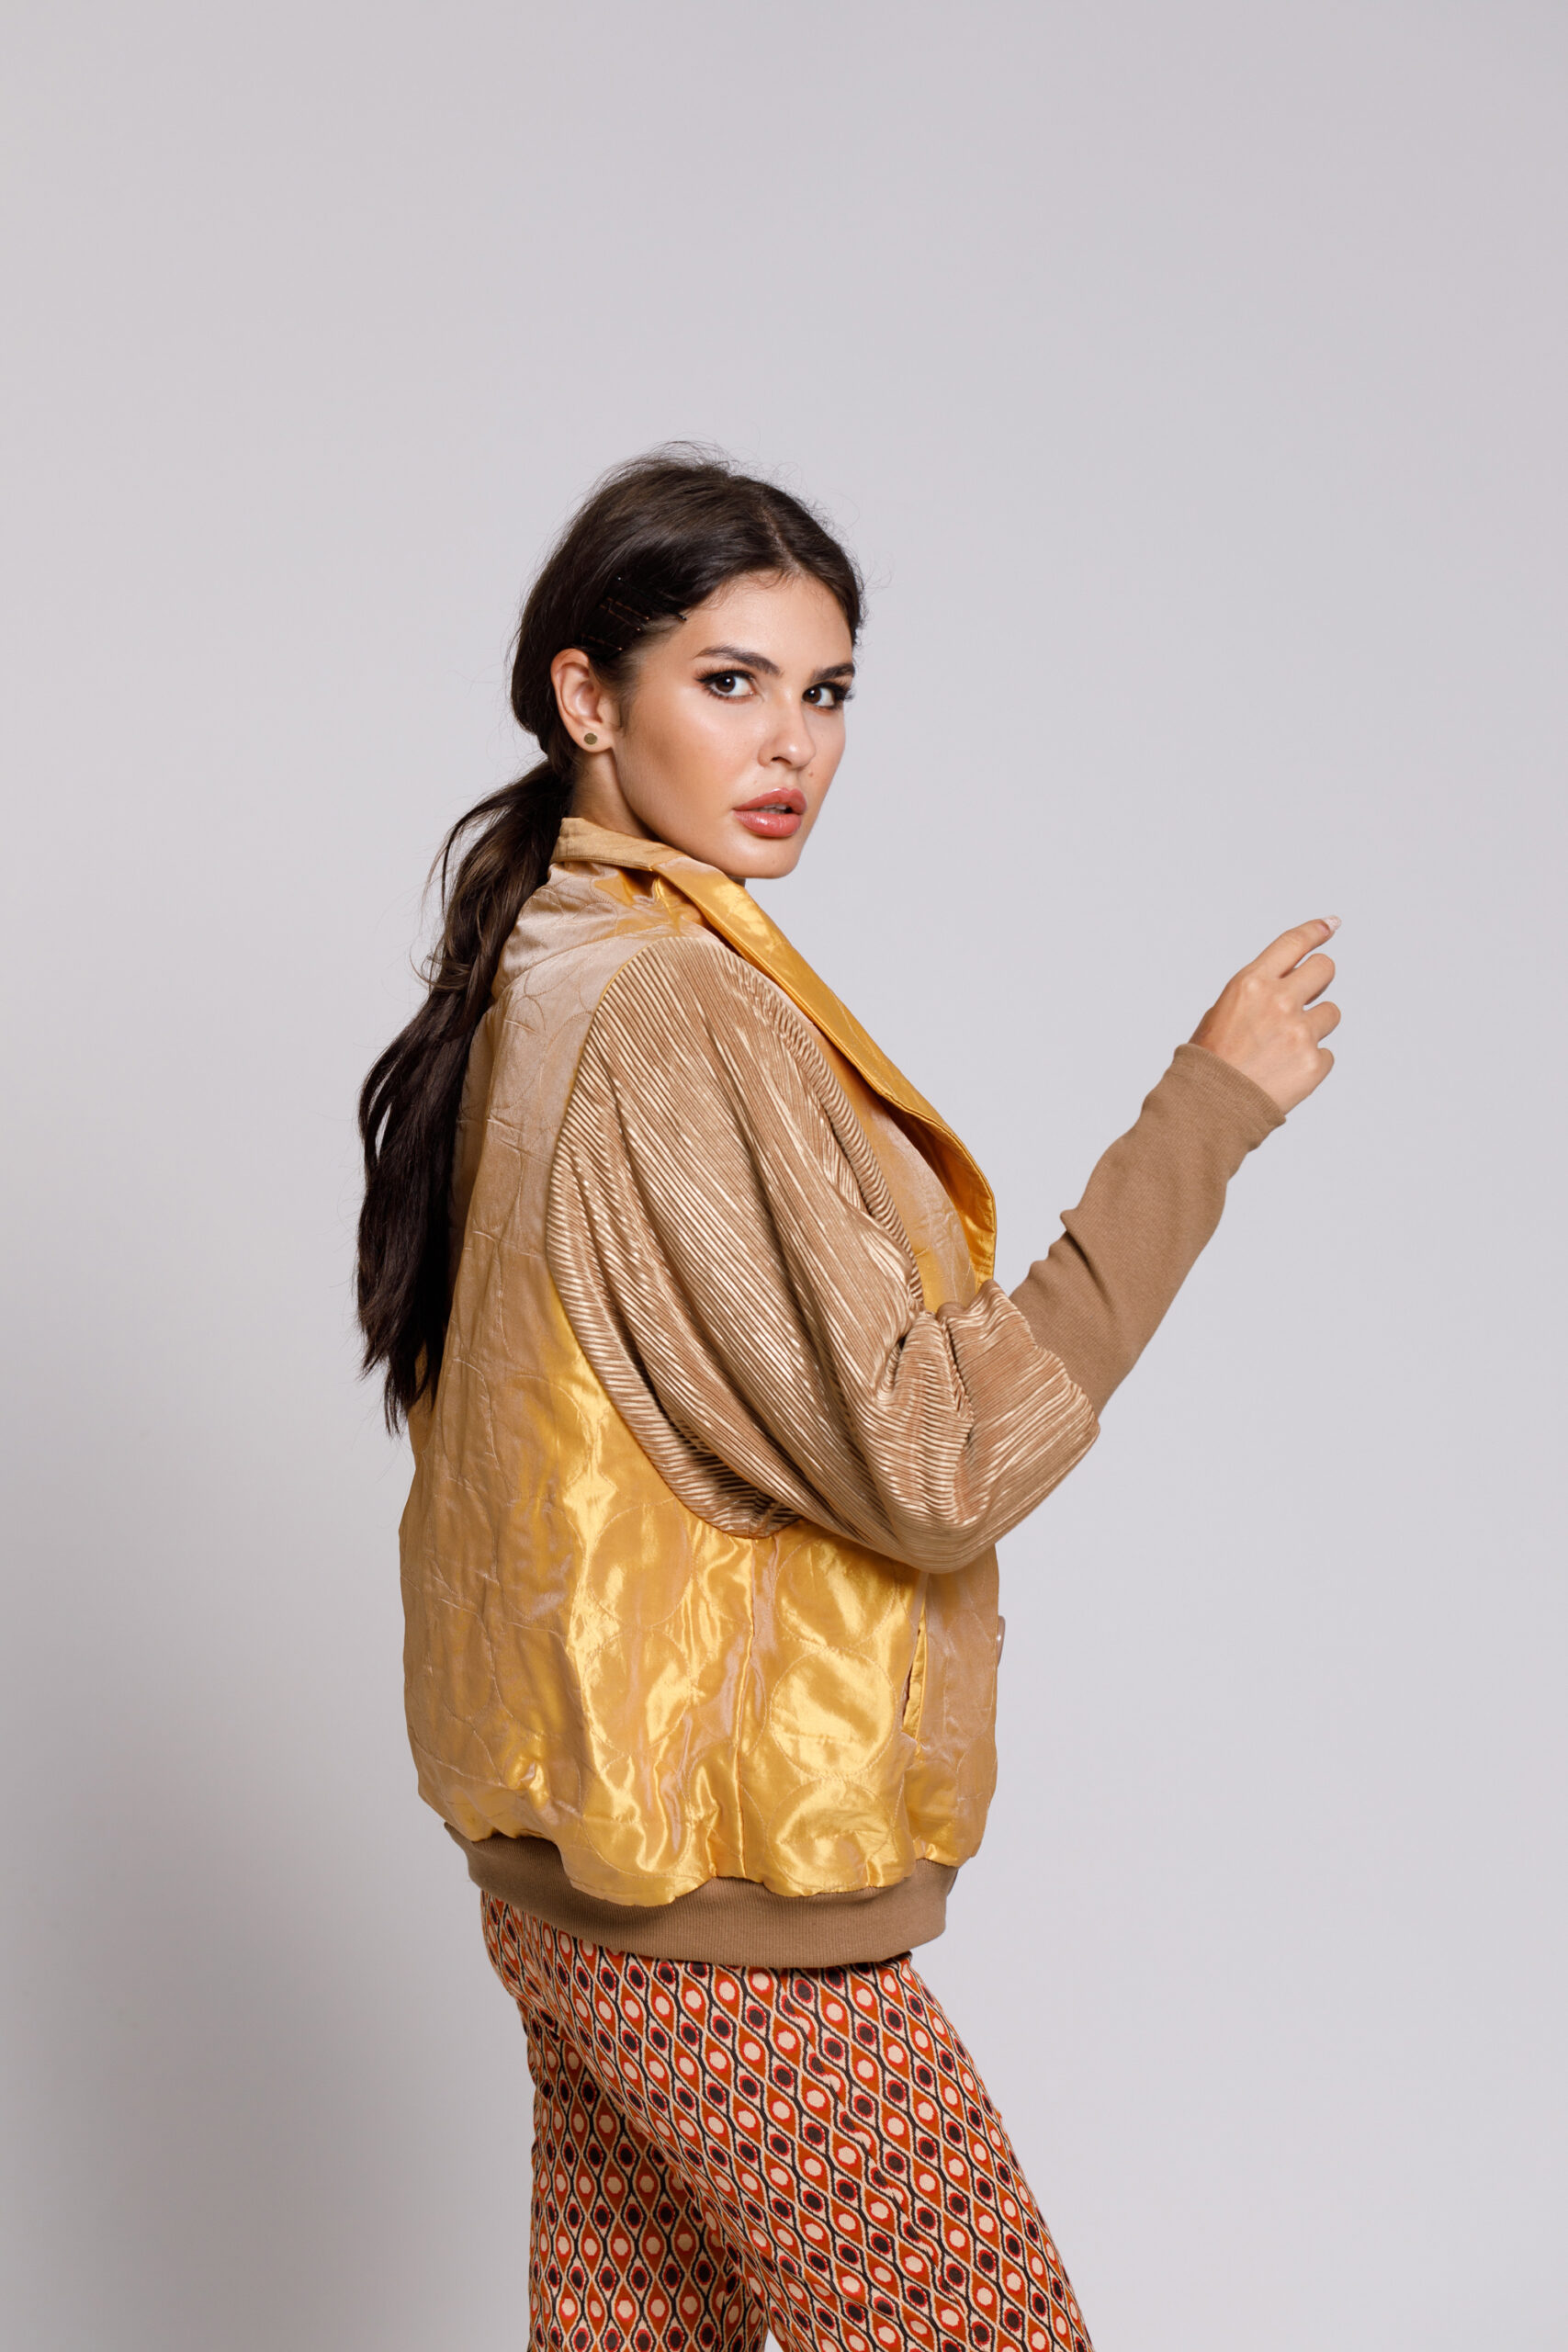 Jacheta ENYA casual din matlasat auriu. Materiale naturale, design unicat, cu broderie si aplicatii handmade